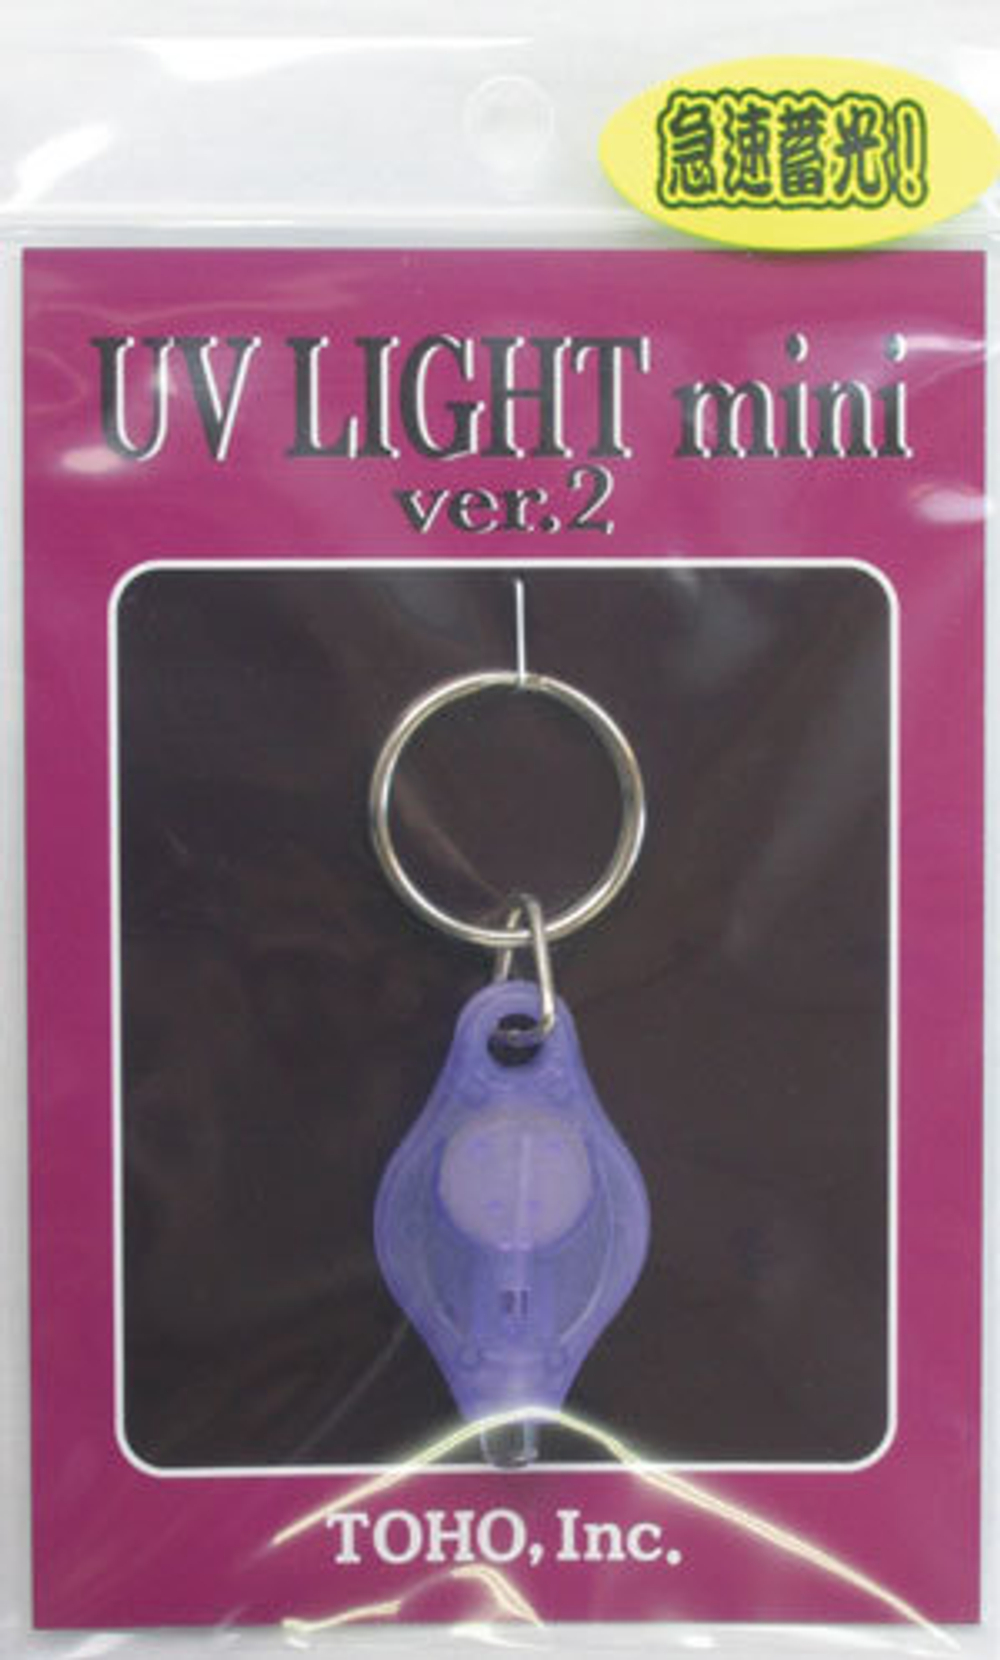 Ультрафиолетовый фонарик TOHO UV LIGHT mini ver.2  PURPLE